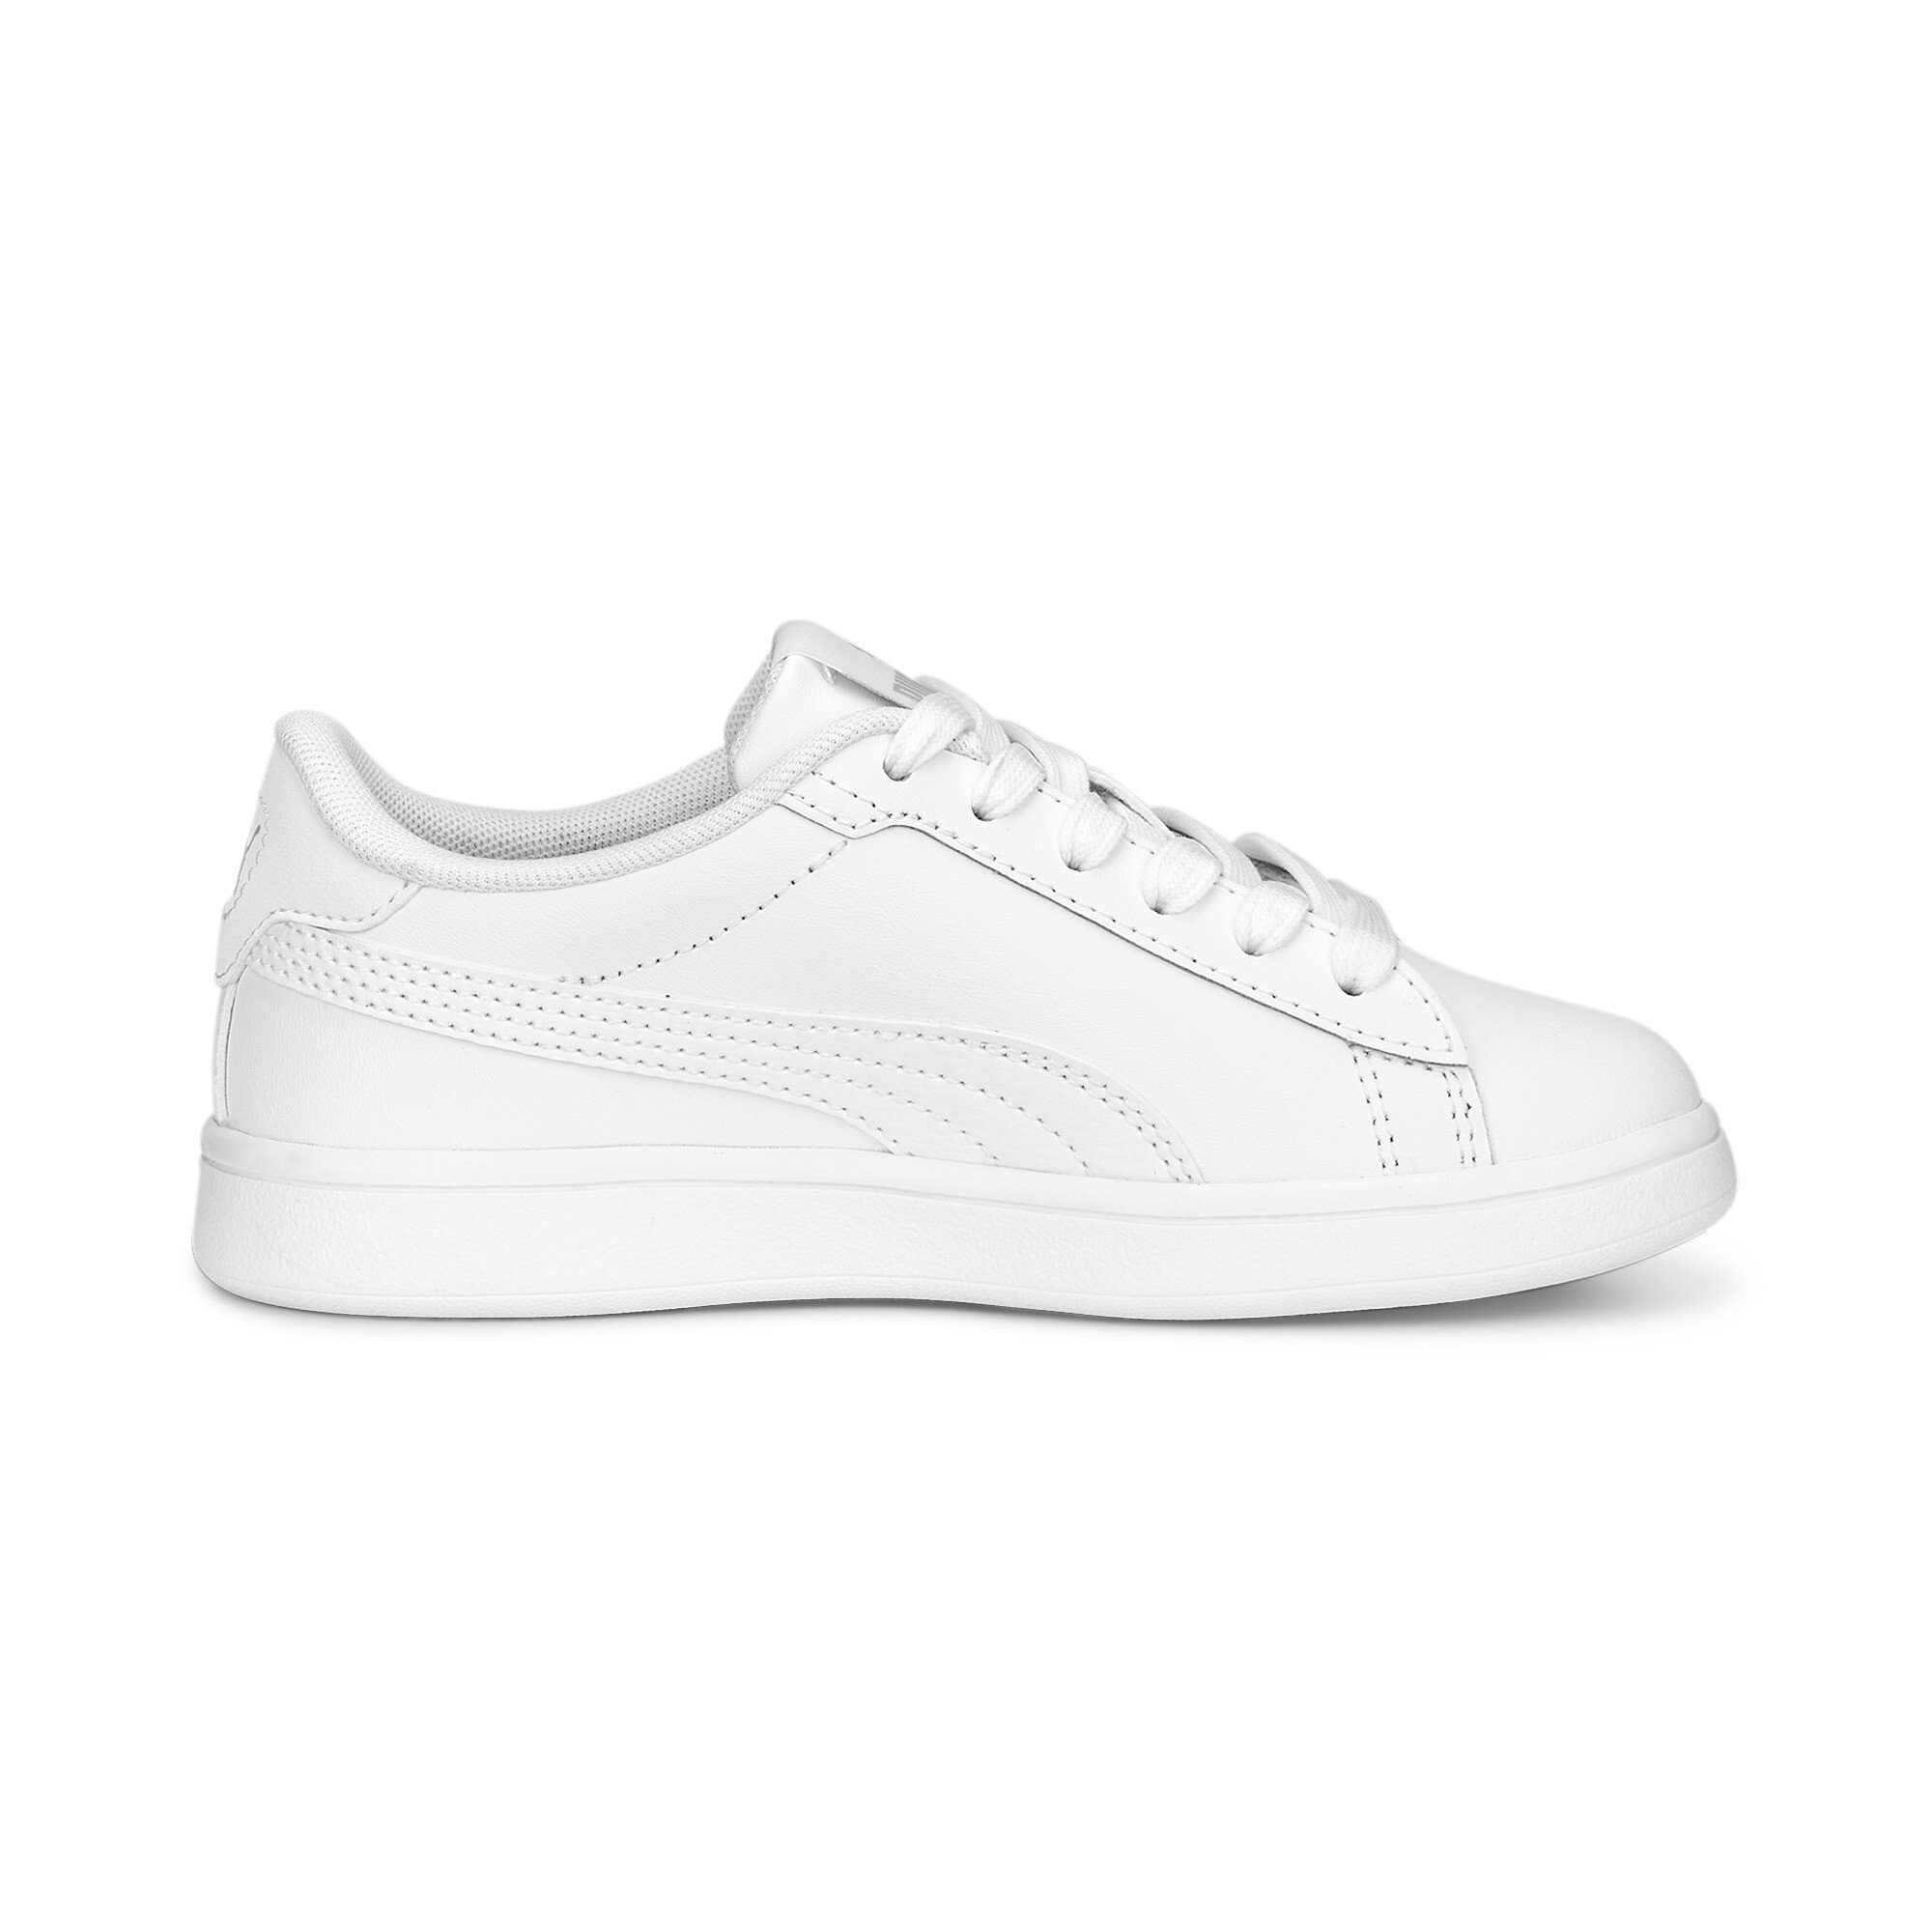 3.0 L PUMA Schuhe Smash Cool Gray Sneaker White Light